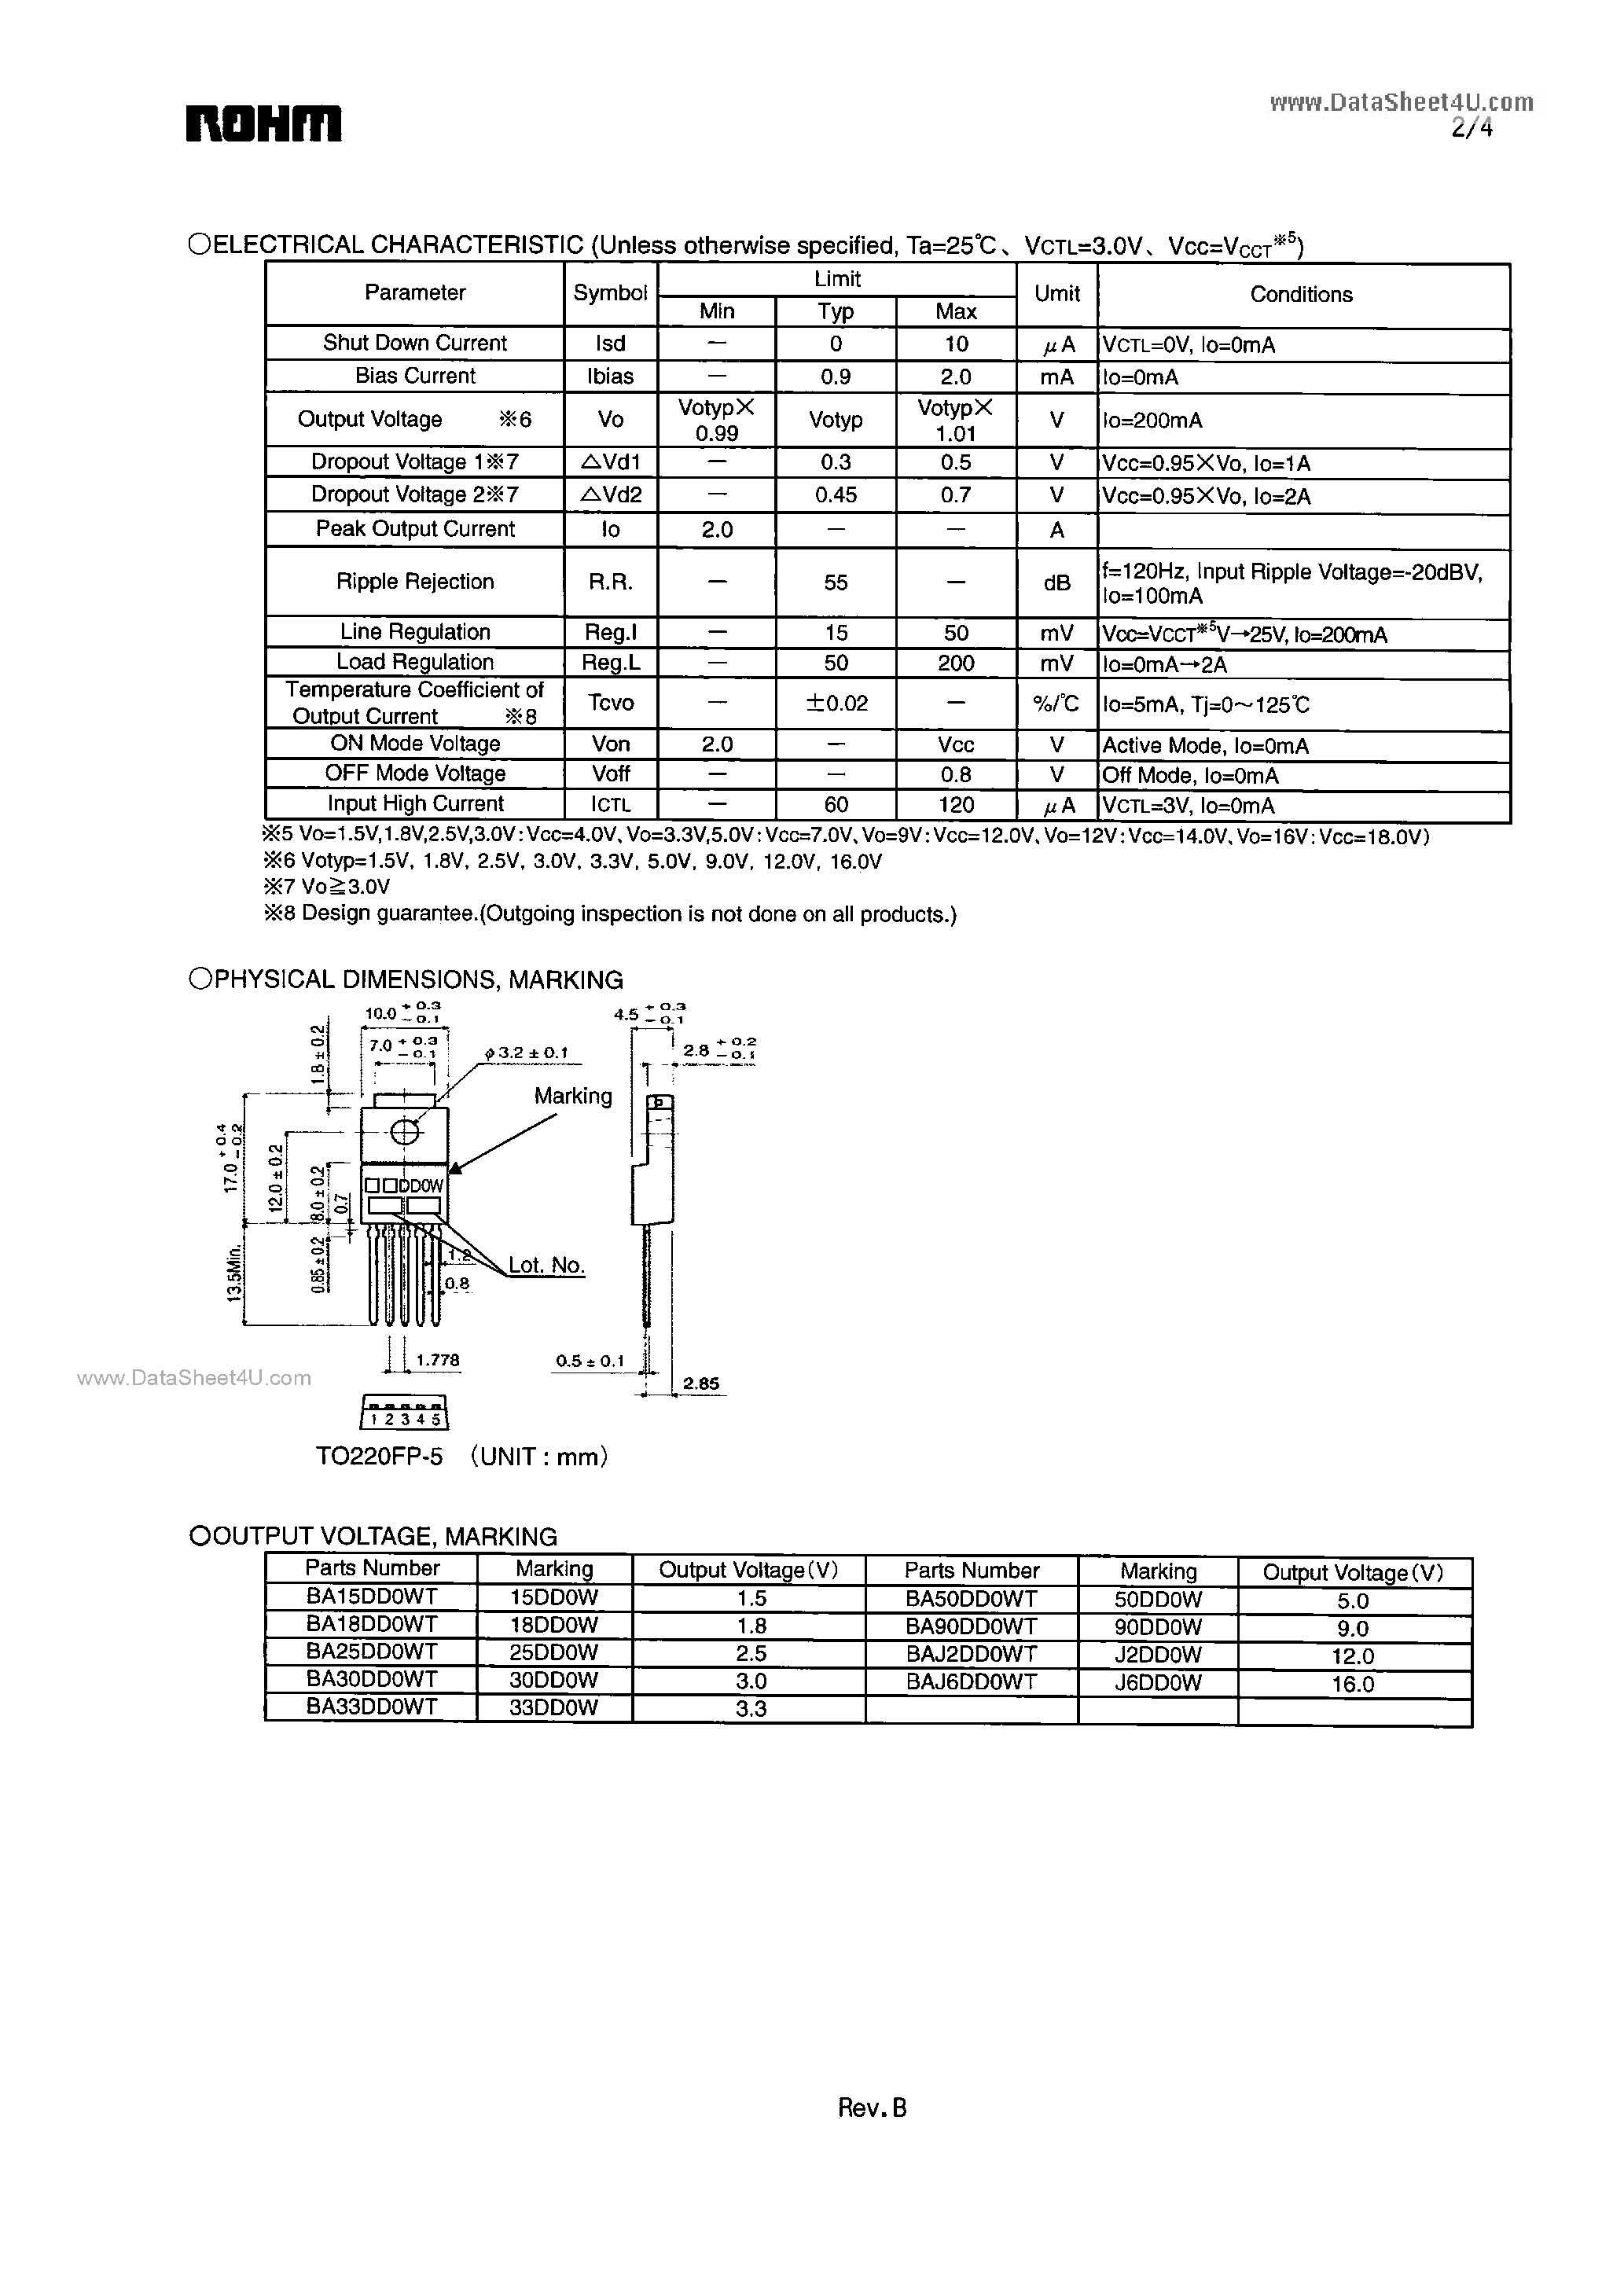 Datasheet BA25DD0WT - 2A Low Dropout Voltage Regulator page 2